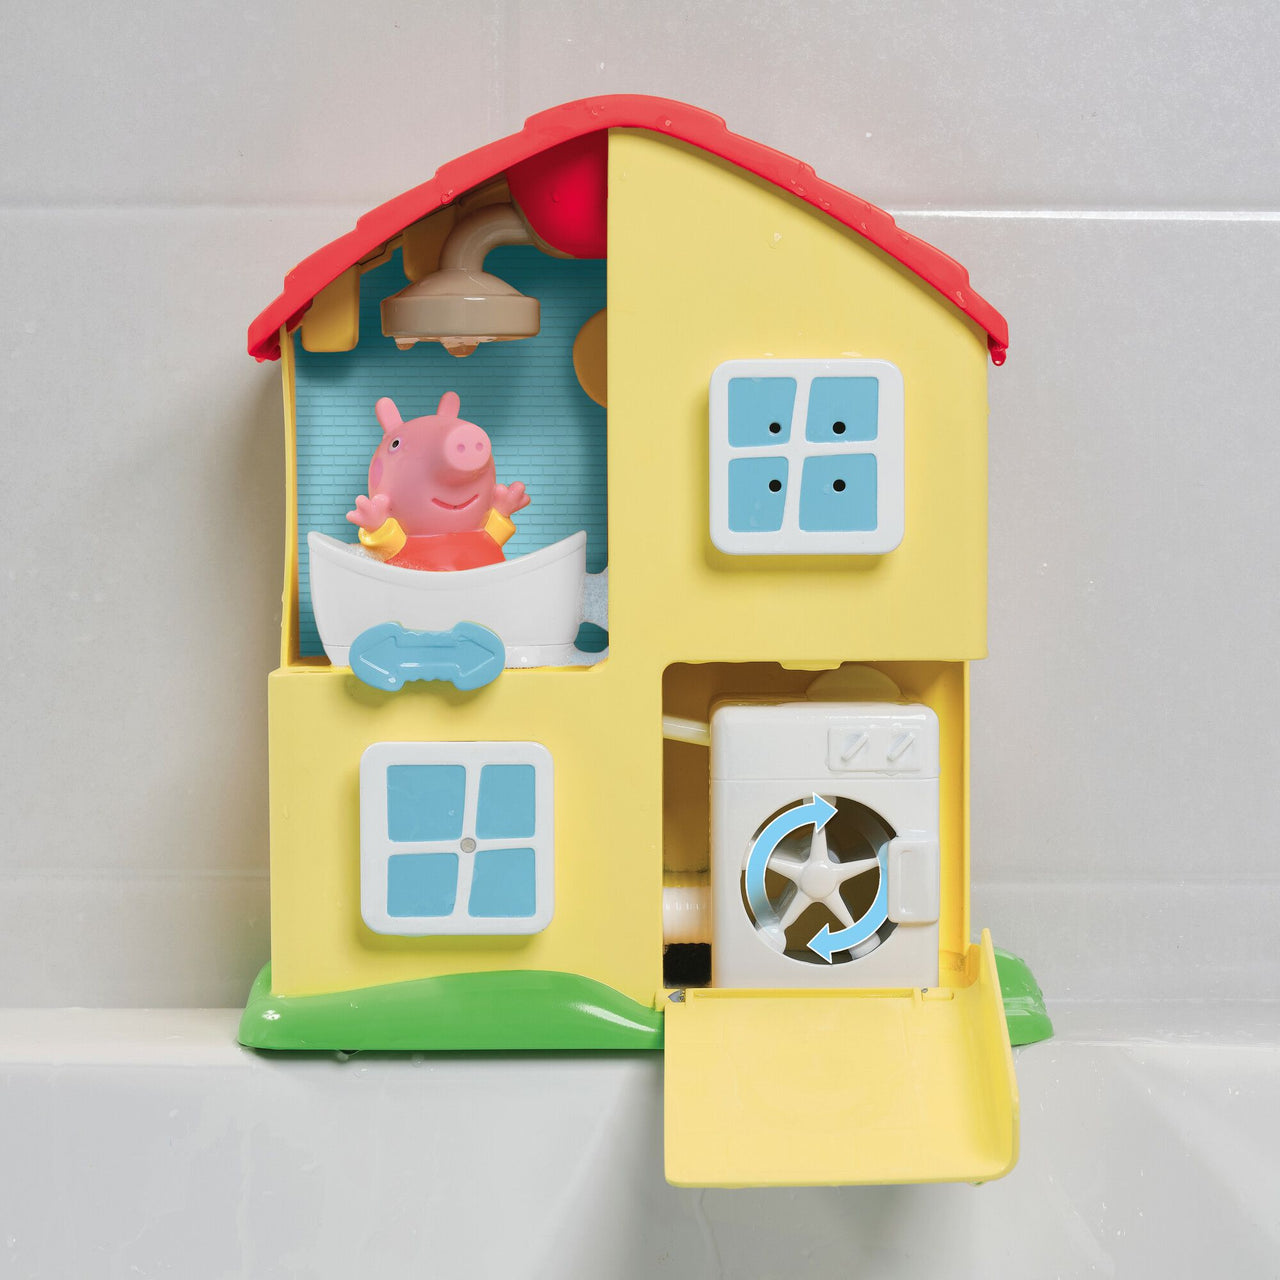 Peppa Pig - Peppa's House Bath Playset